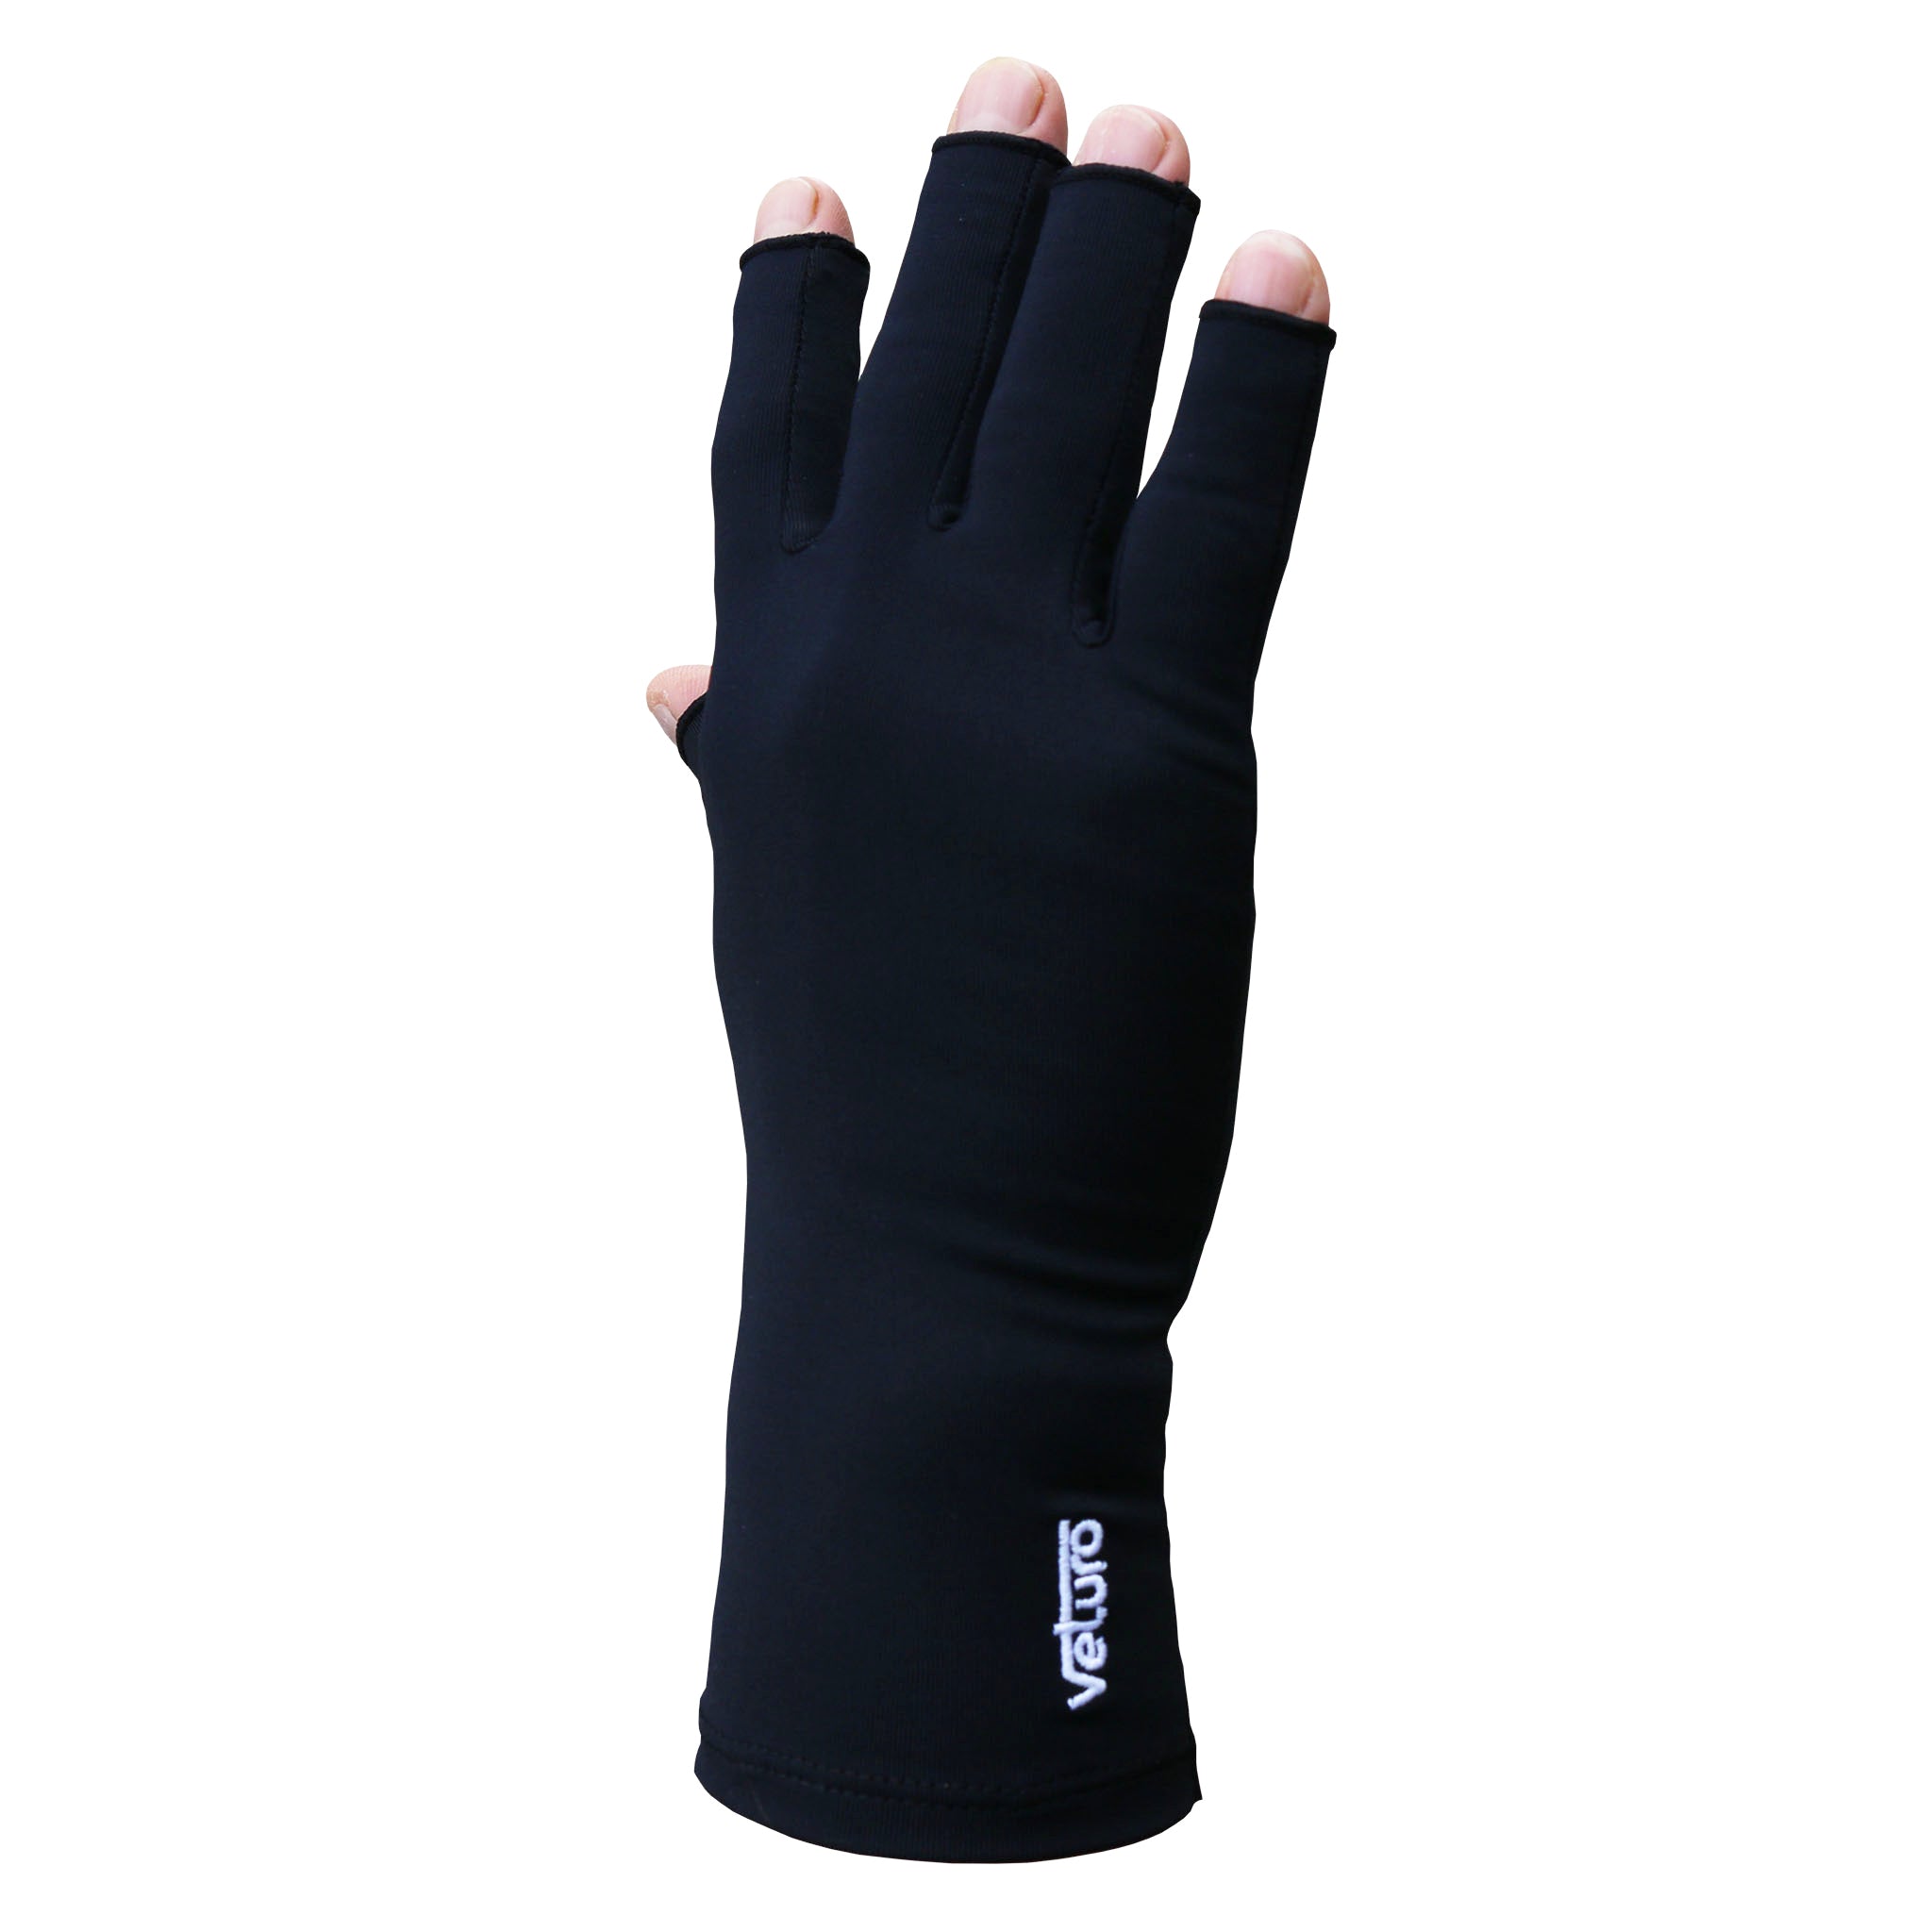 Raynaud’s Sensitive Hands Support Infrared Fleece Gloves